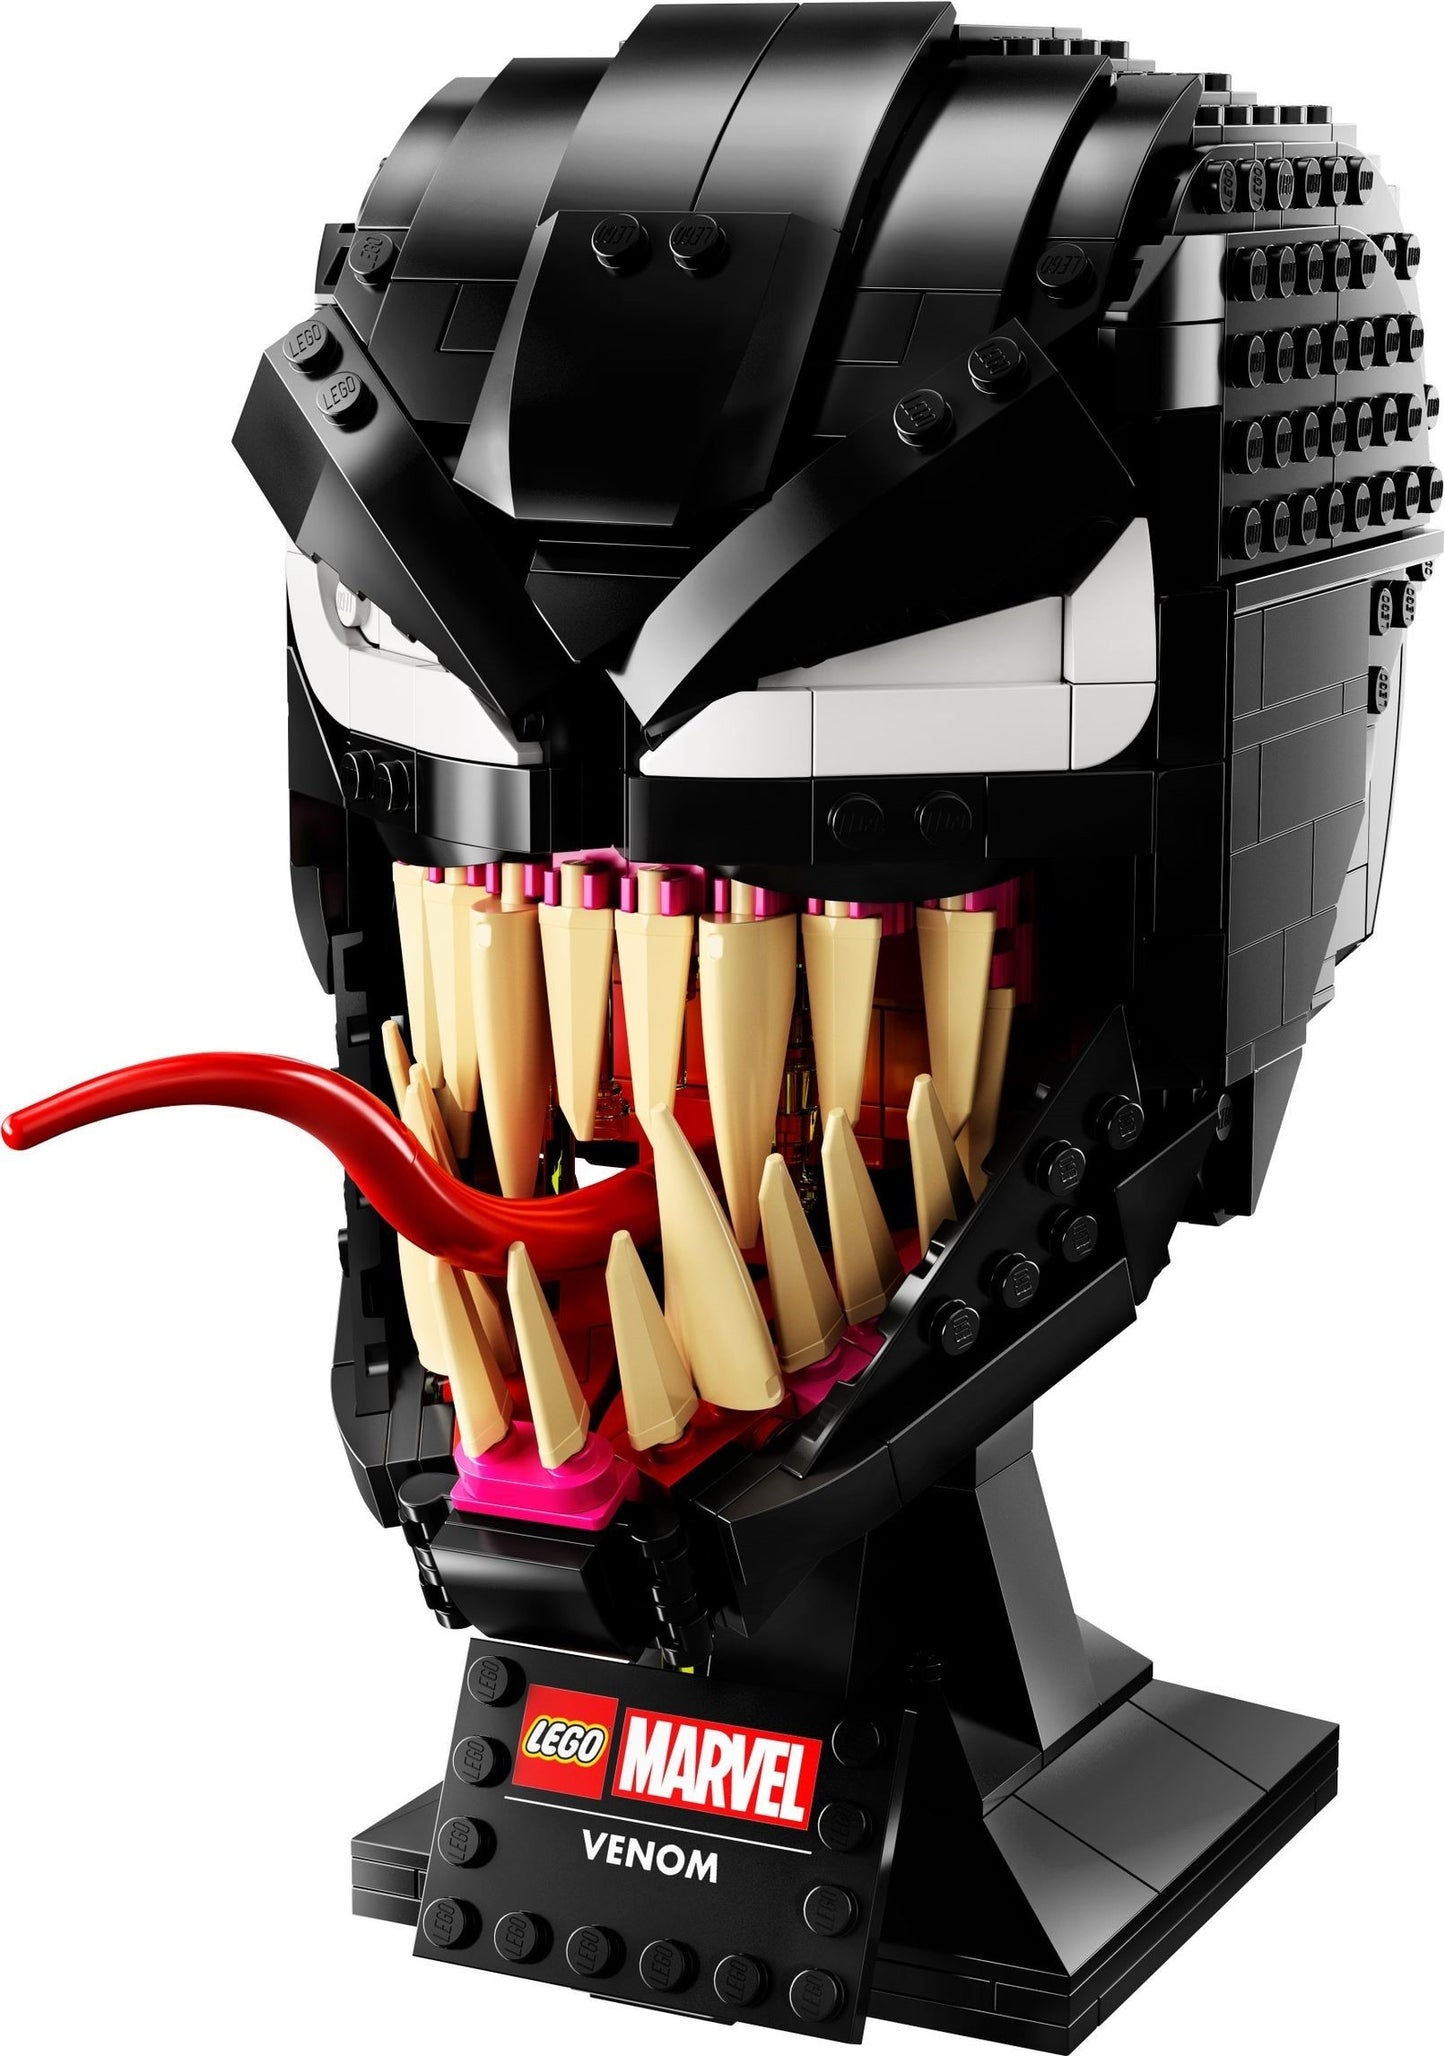 76187 - LEGO Super Heroes - Venom